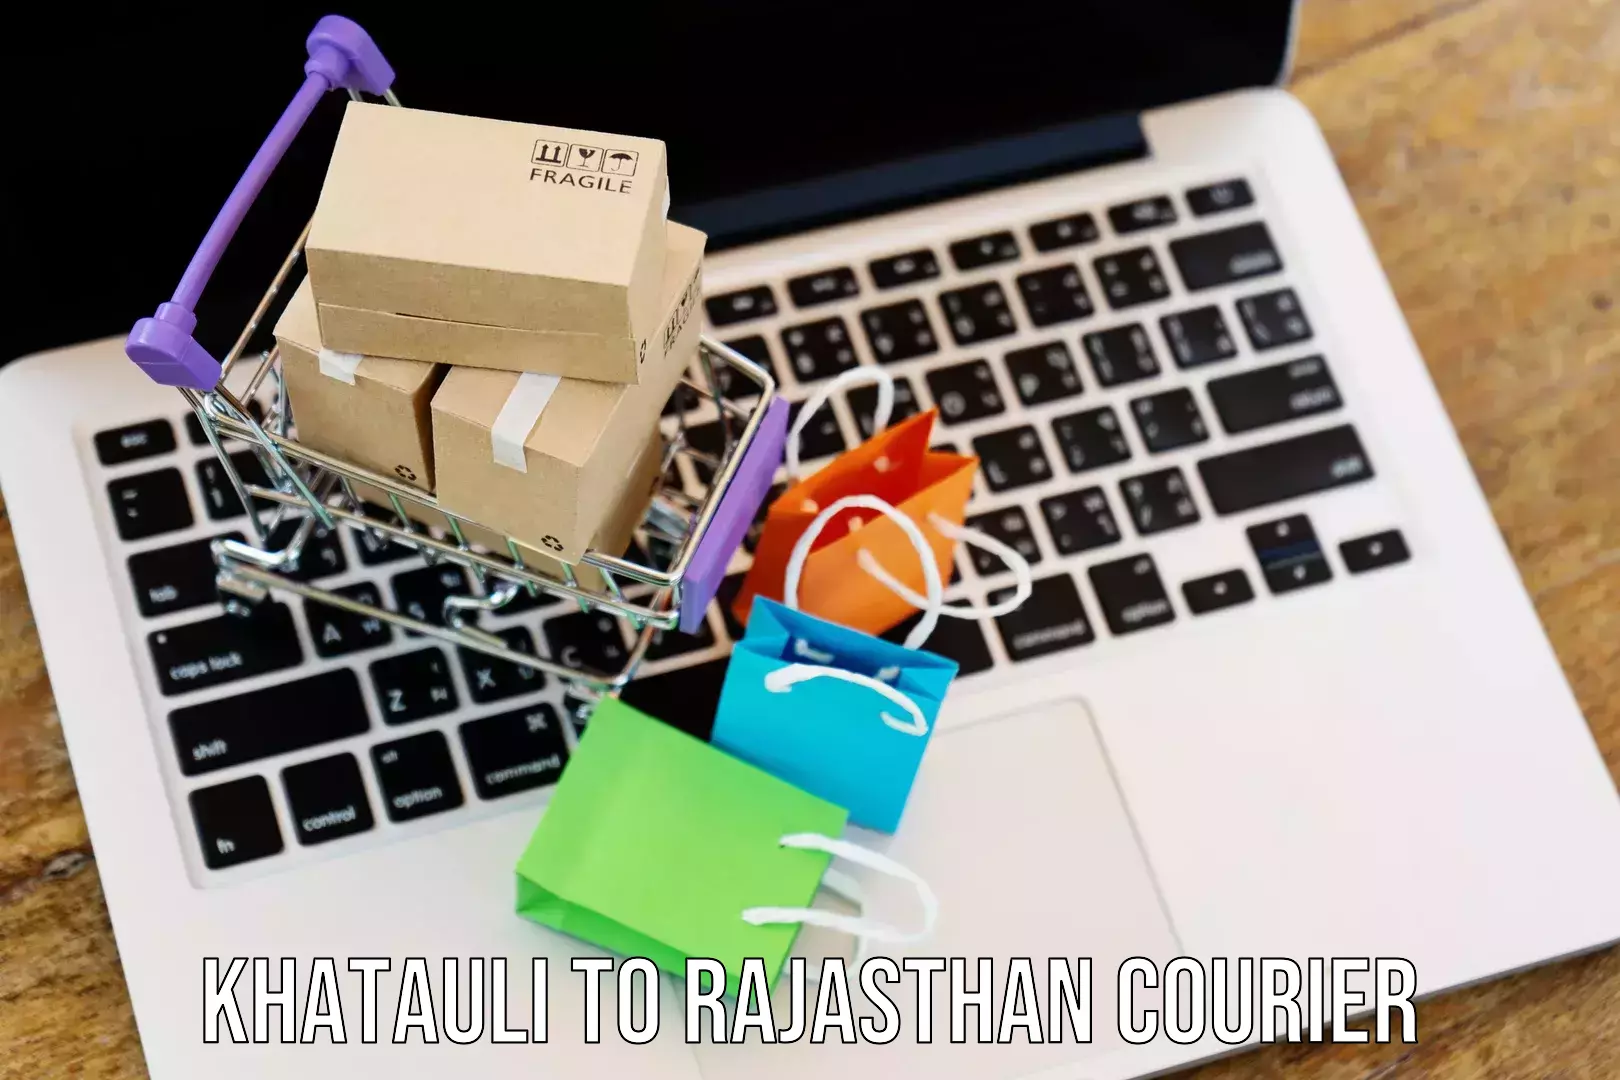 State-of-the-art courier technology Khatauli to Kekri